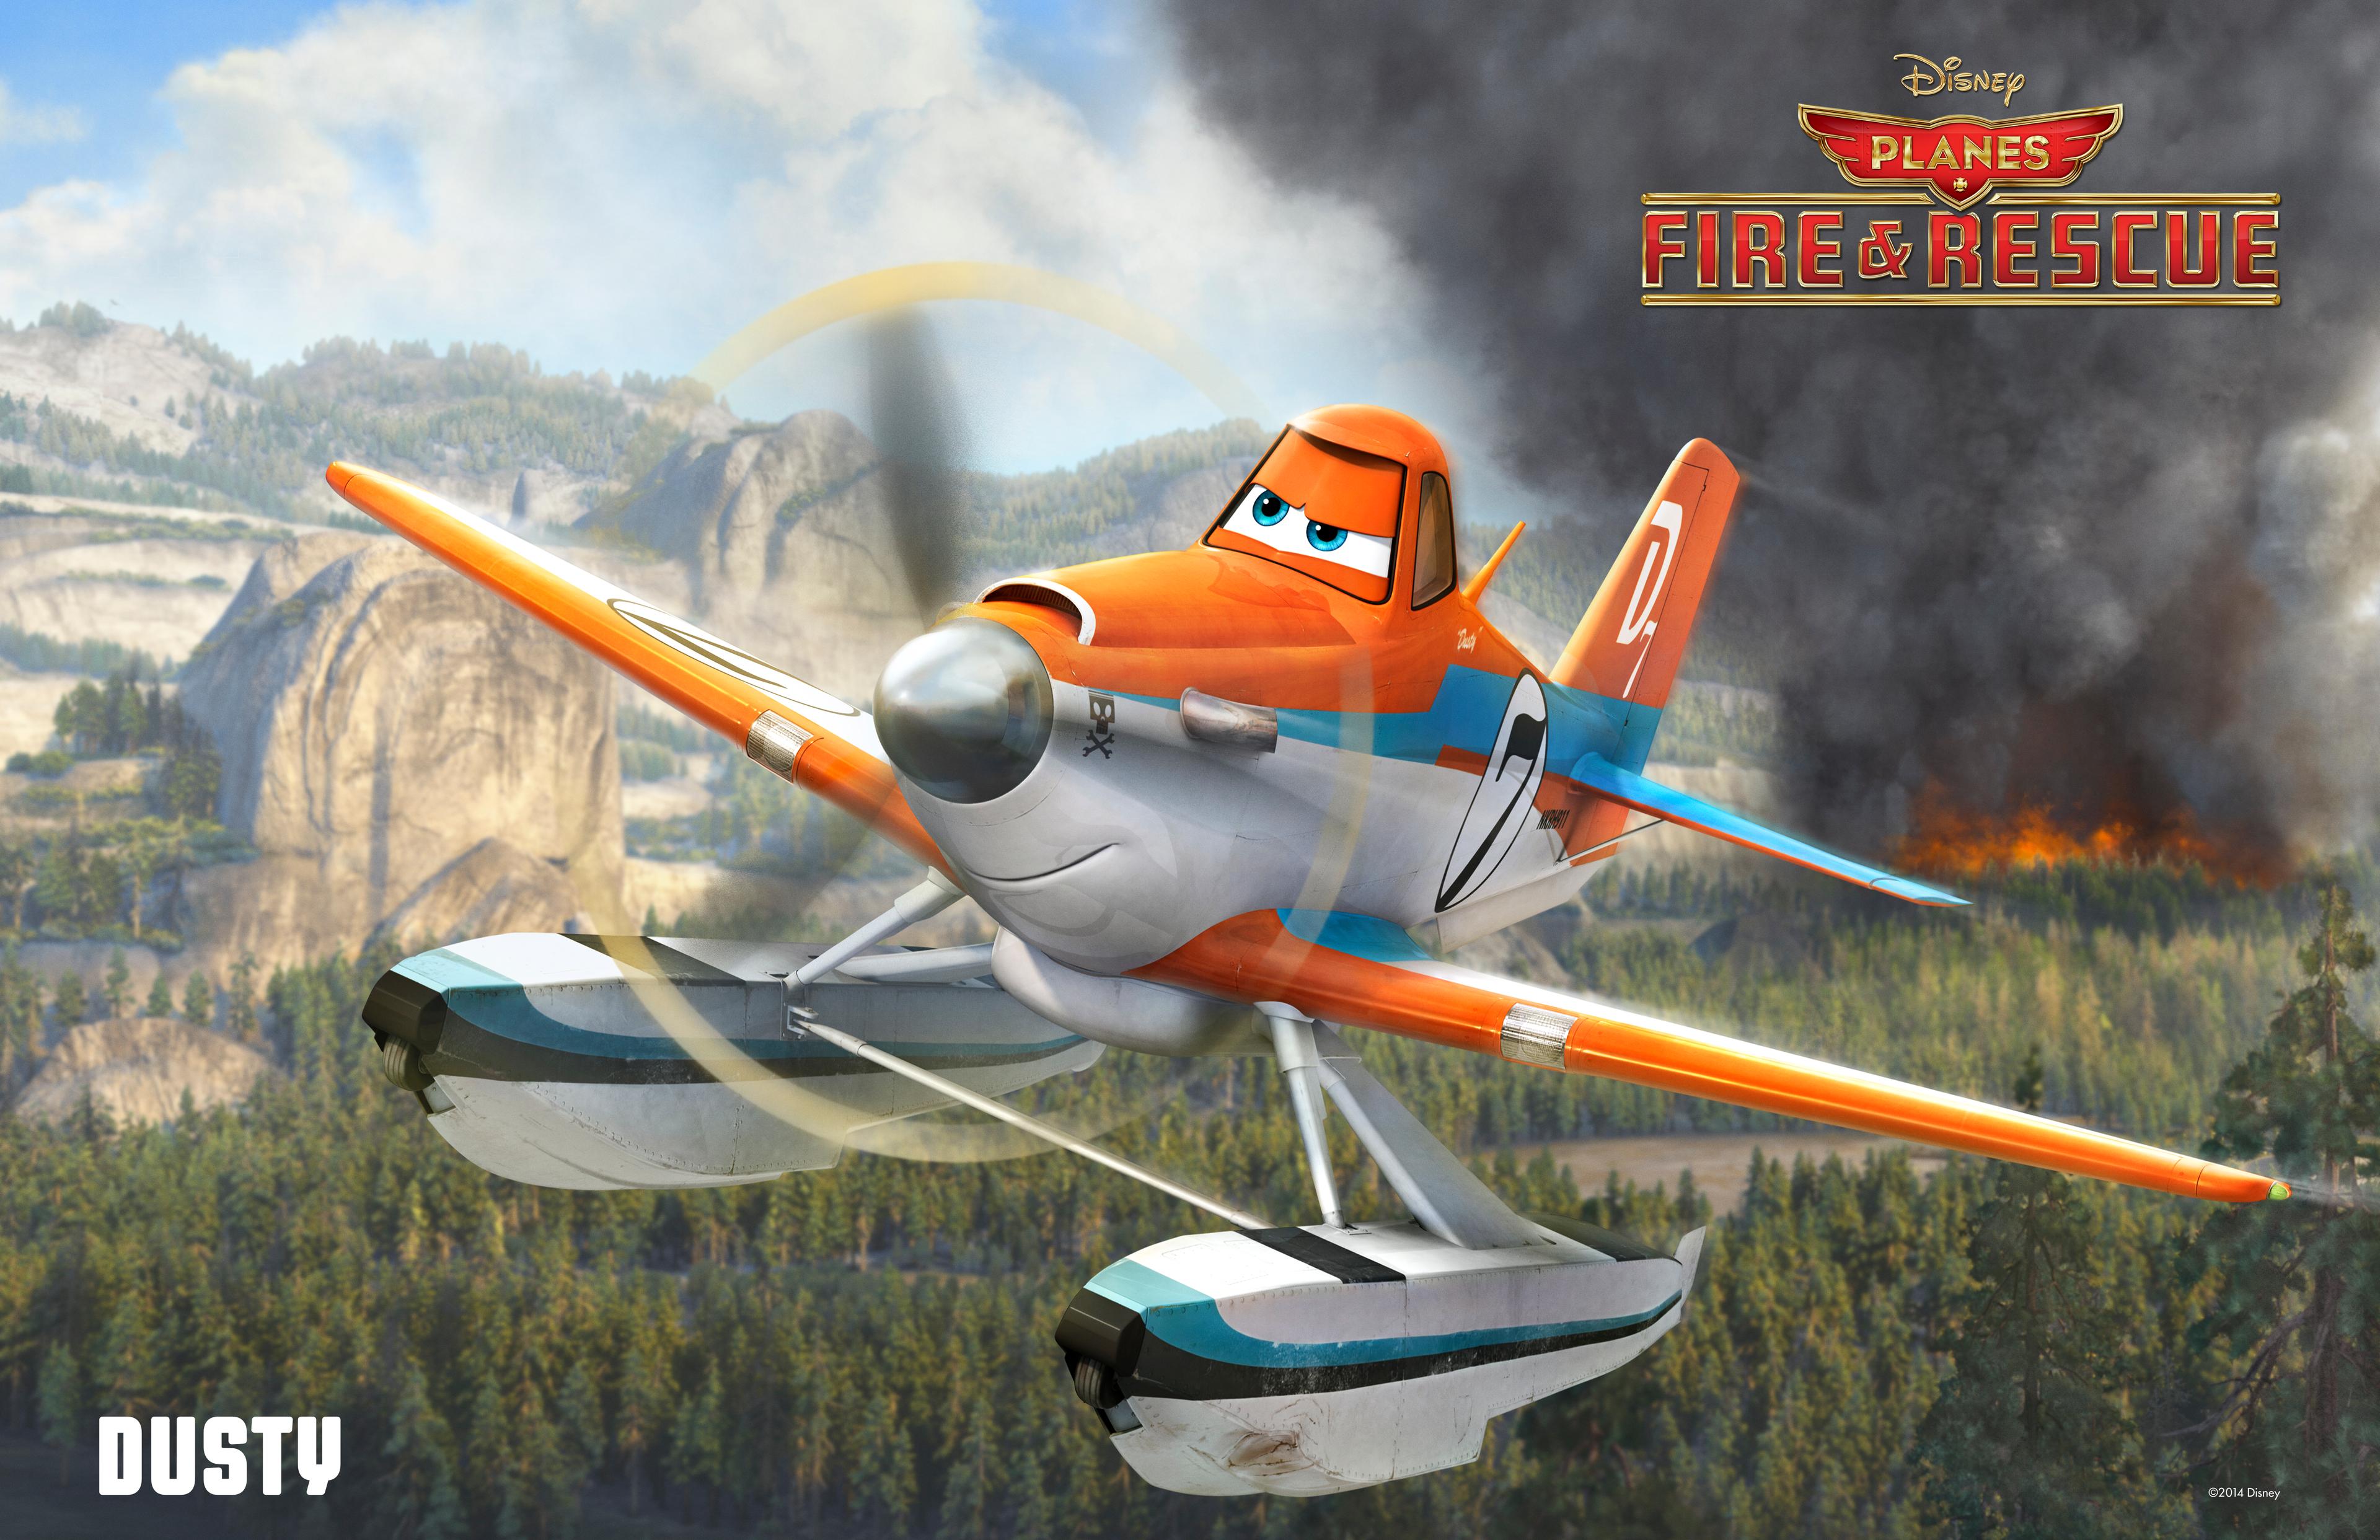 Movie Review Planes Fire & Rescue, Perjuangan Dusty Mengorbankan Segalanya